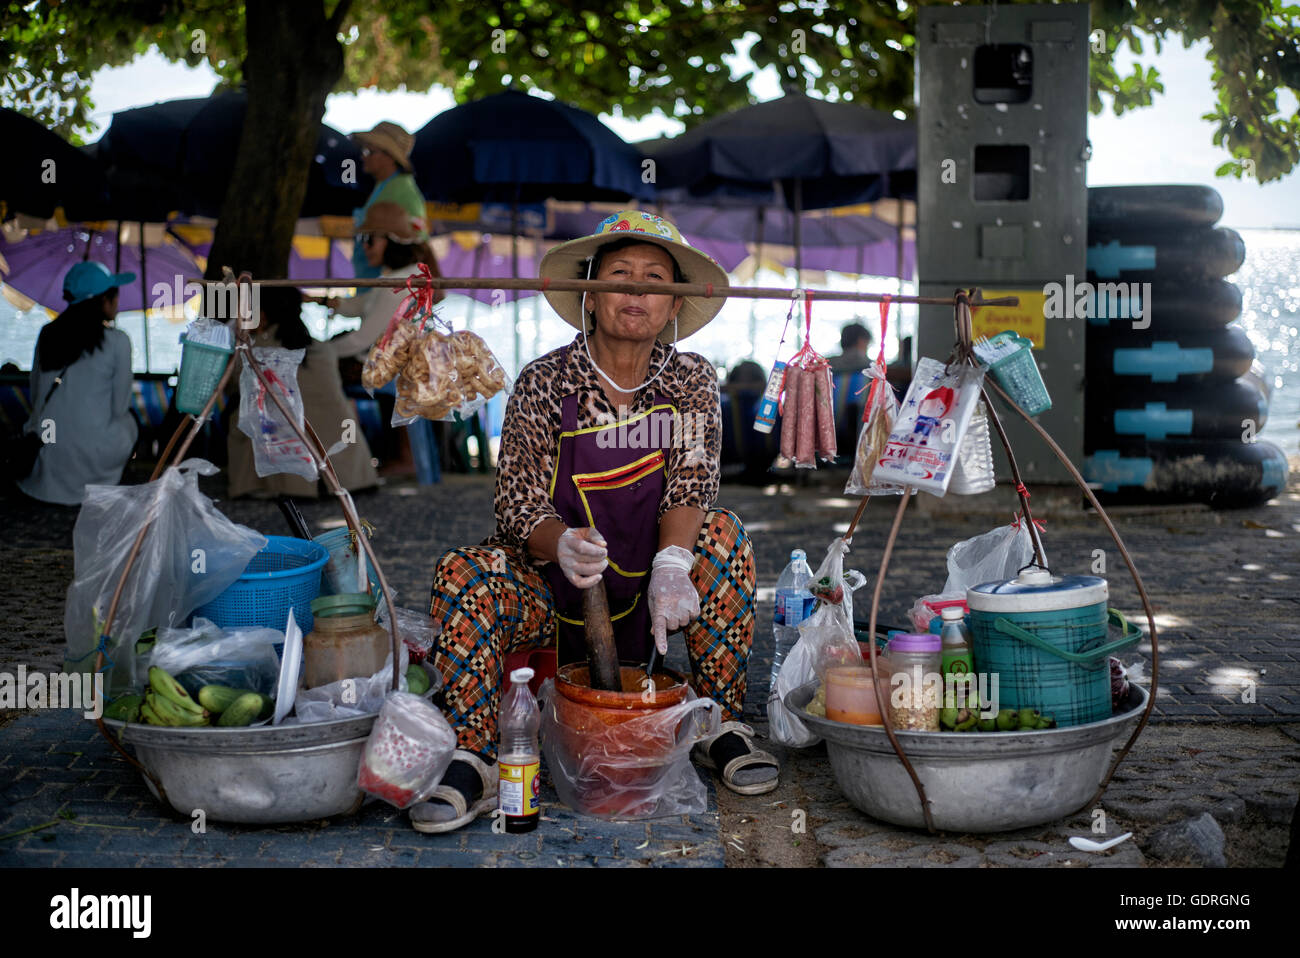 Image result for pattaya street vendor spicy papaya salads images